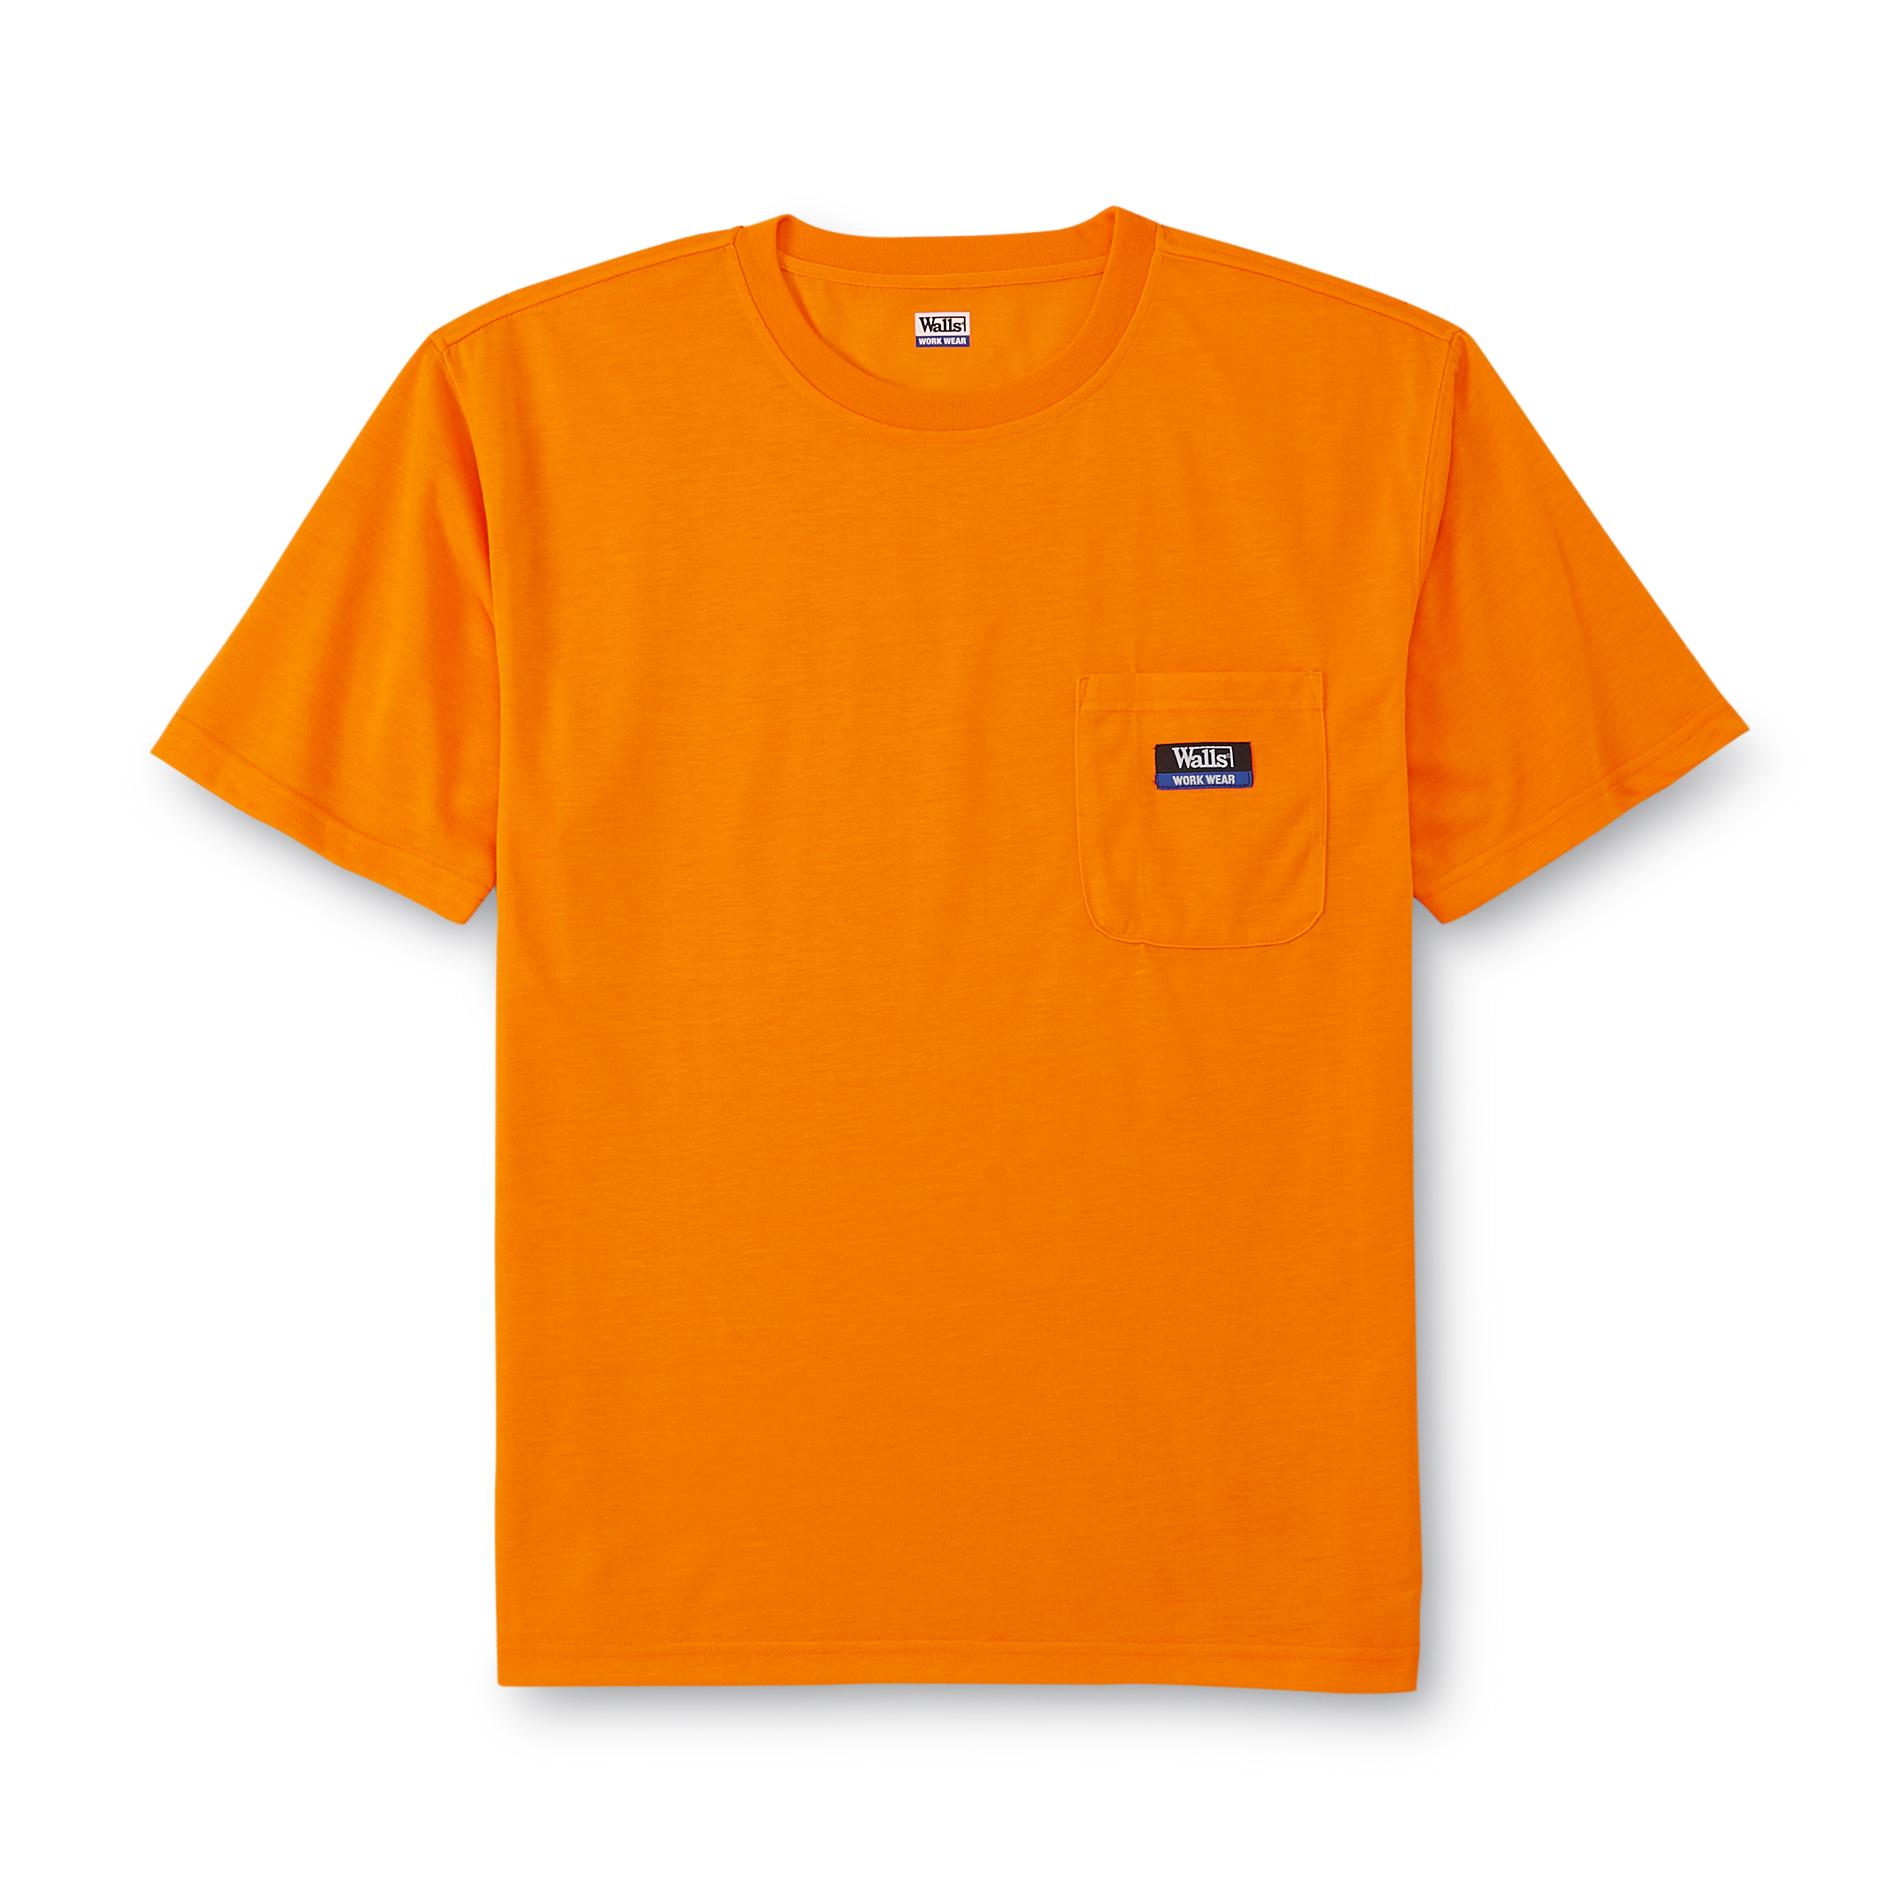 Walls Workwear Logo - Walls Men's High-Visibility Safety T-Shirt